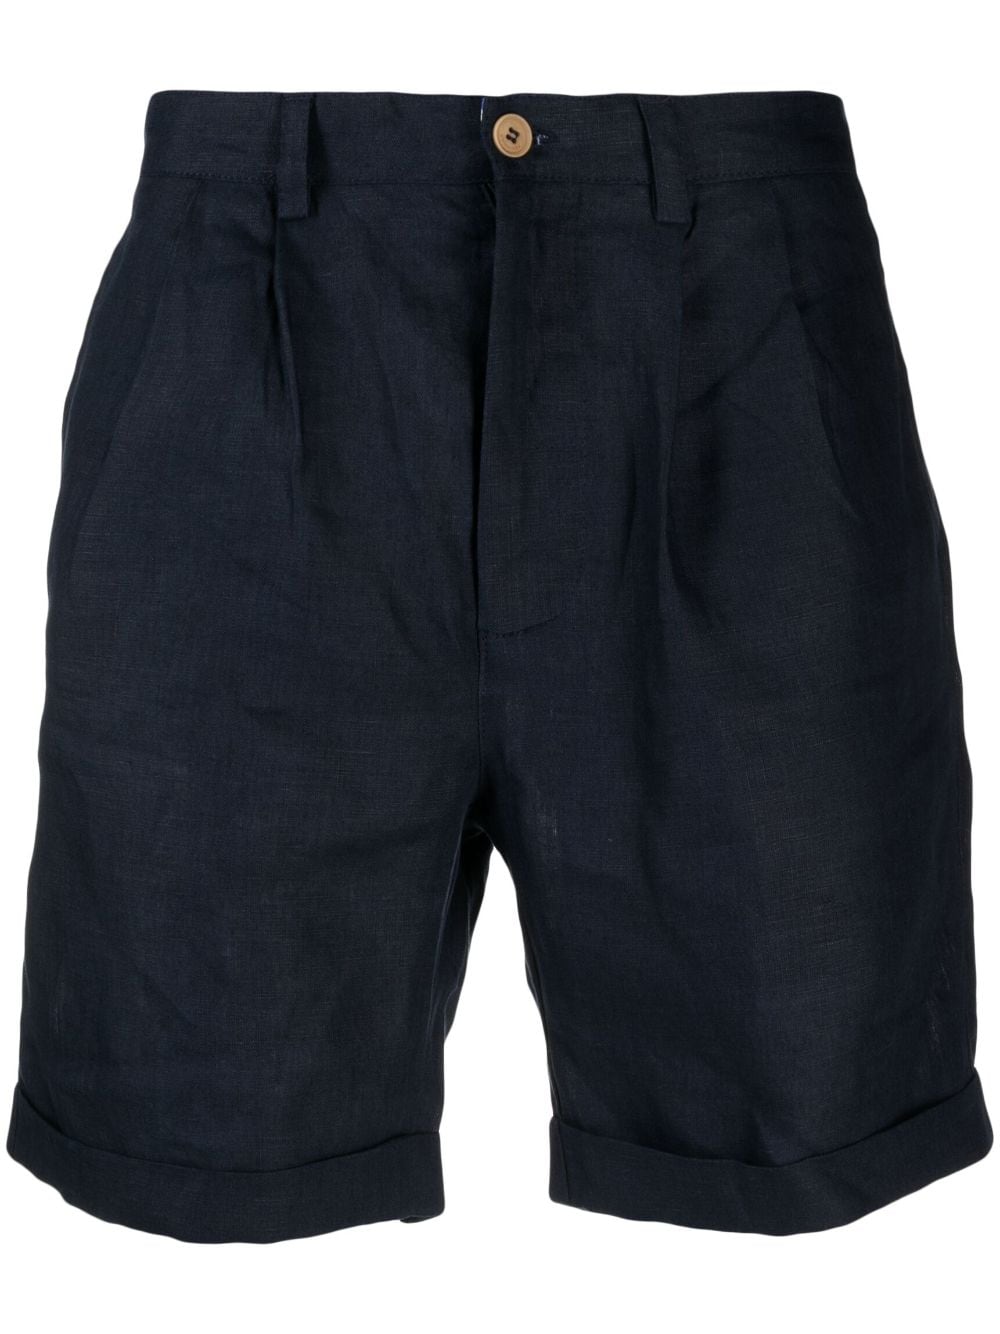 Peninsula Swimwear Stromboli Linen Black Shorts In Blue